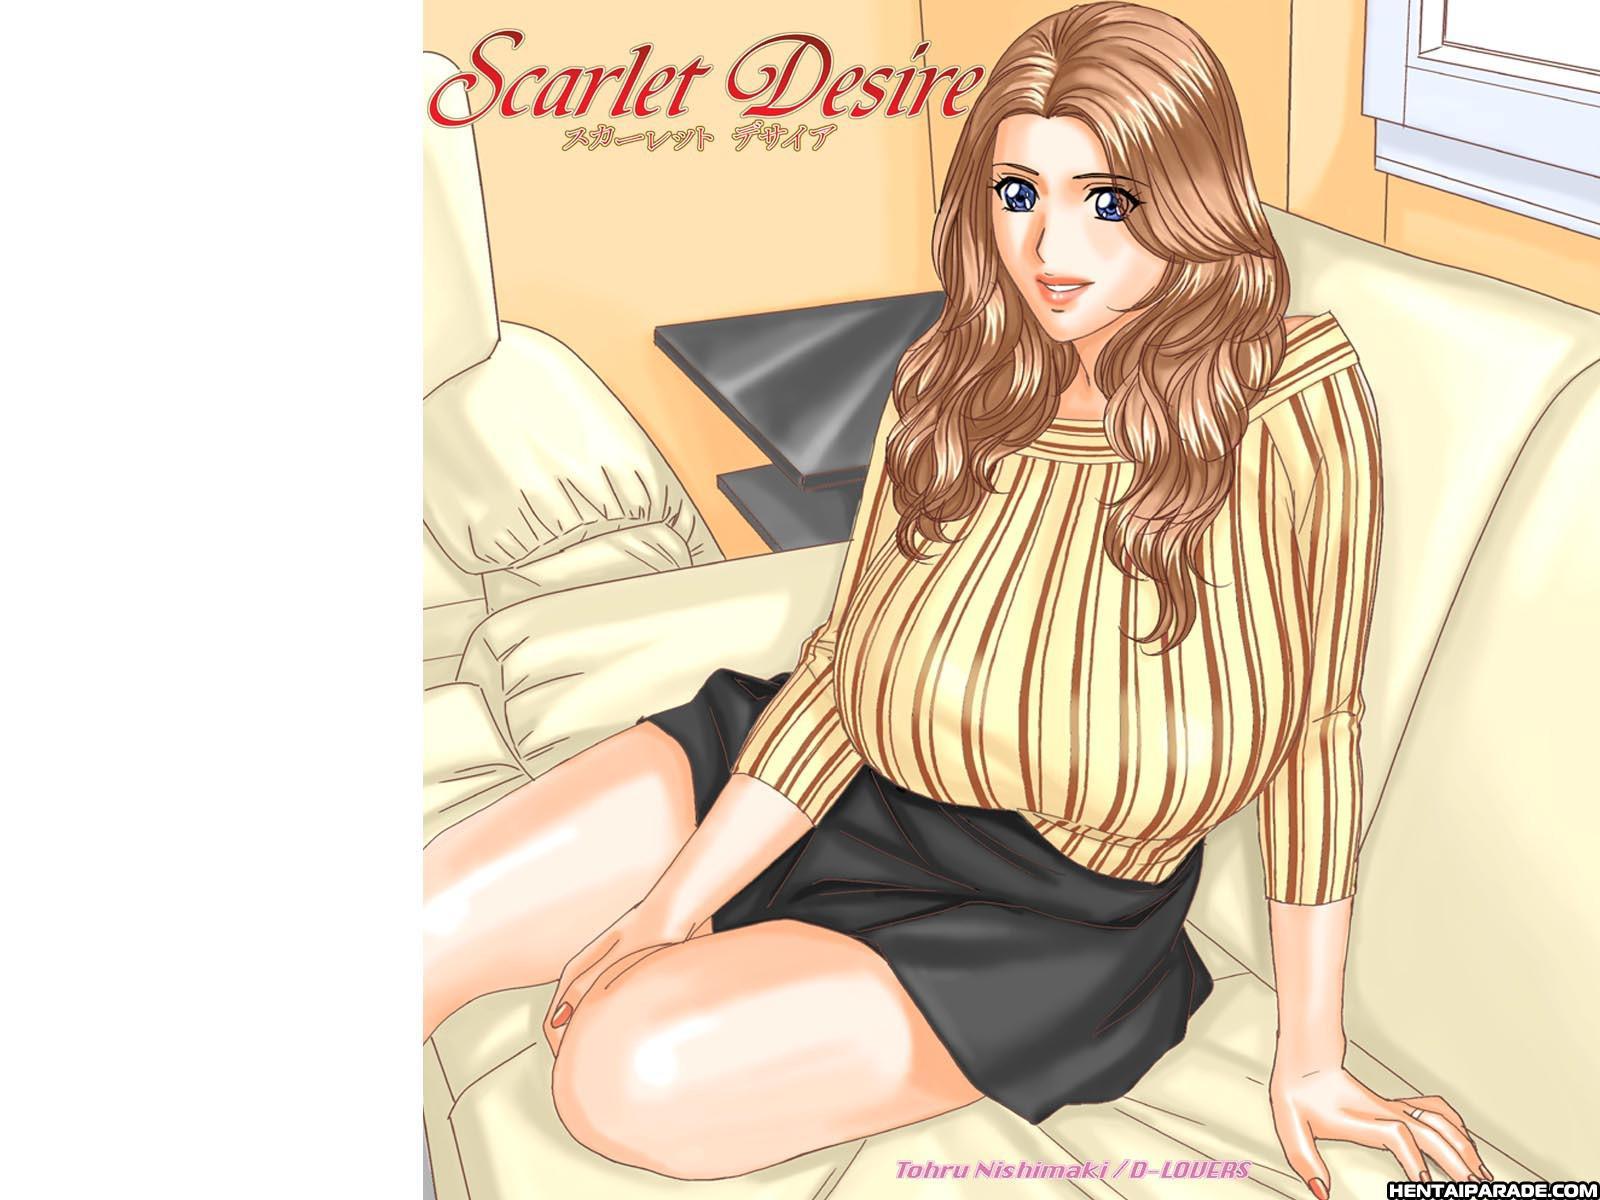 Scarlet Desire 10